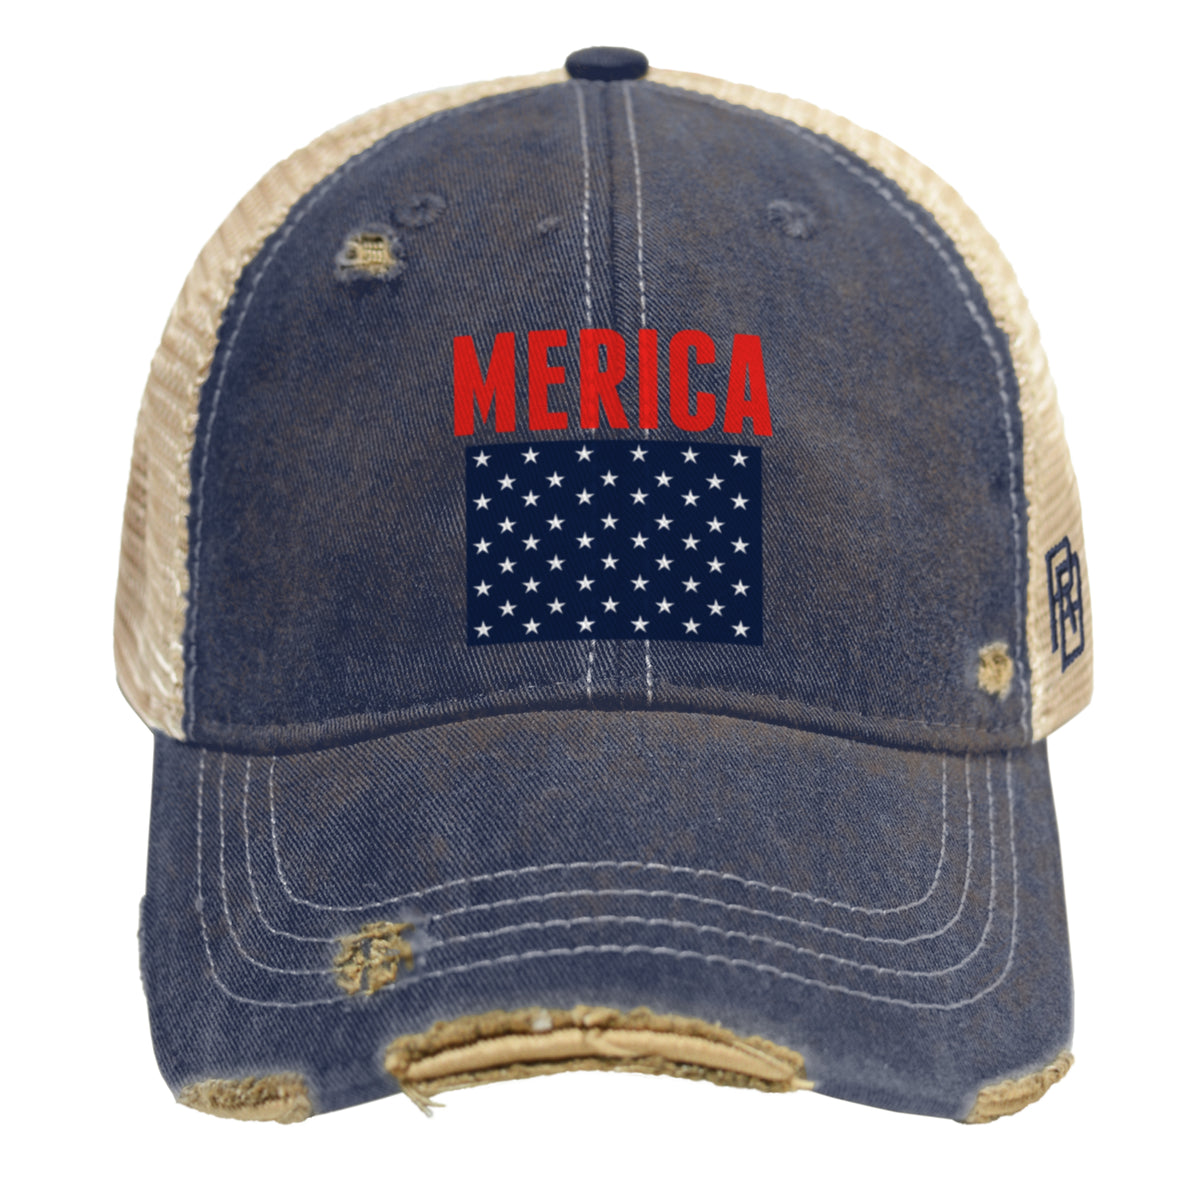 Merica Snapback Trucker Hat